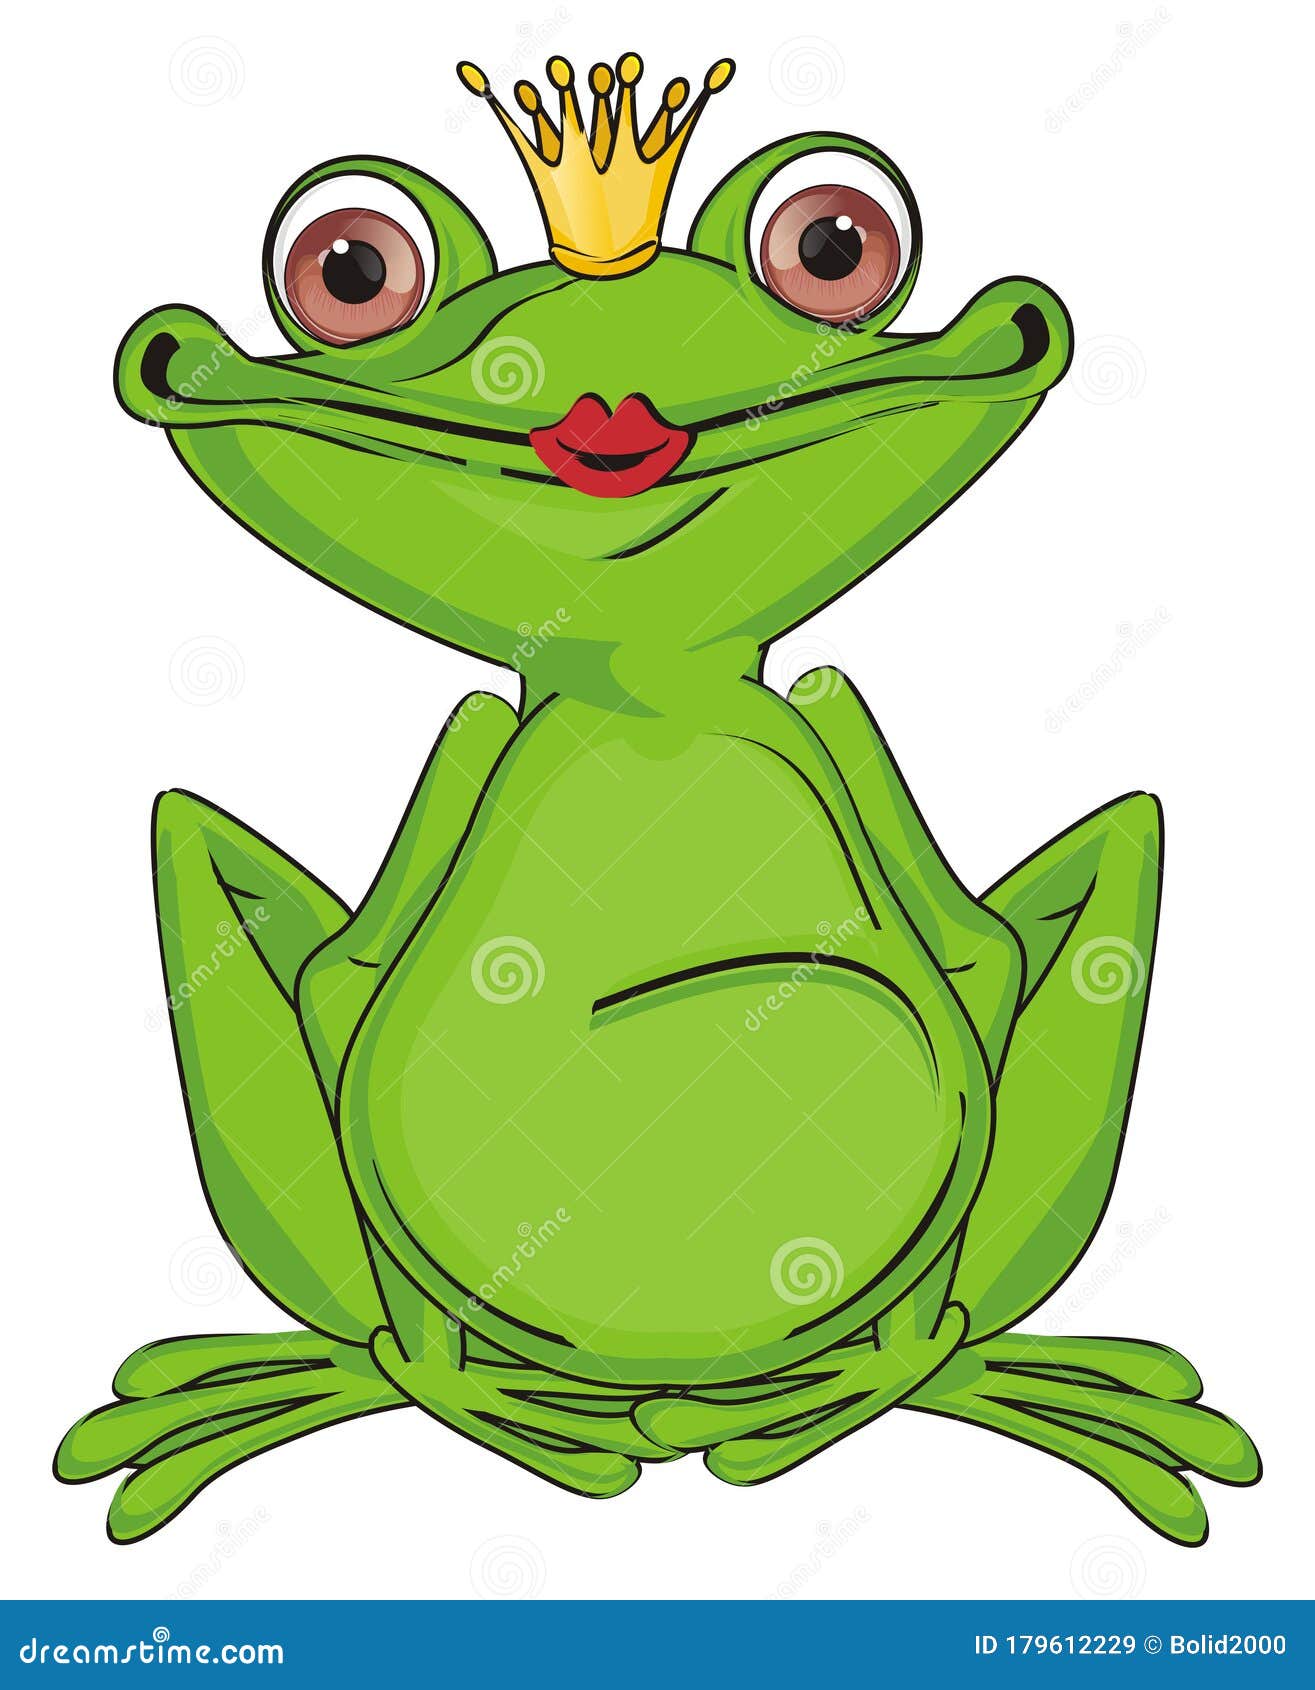 Green princess frog stock illustration. Illustration of golden - 179612229